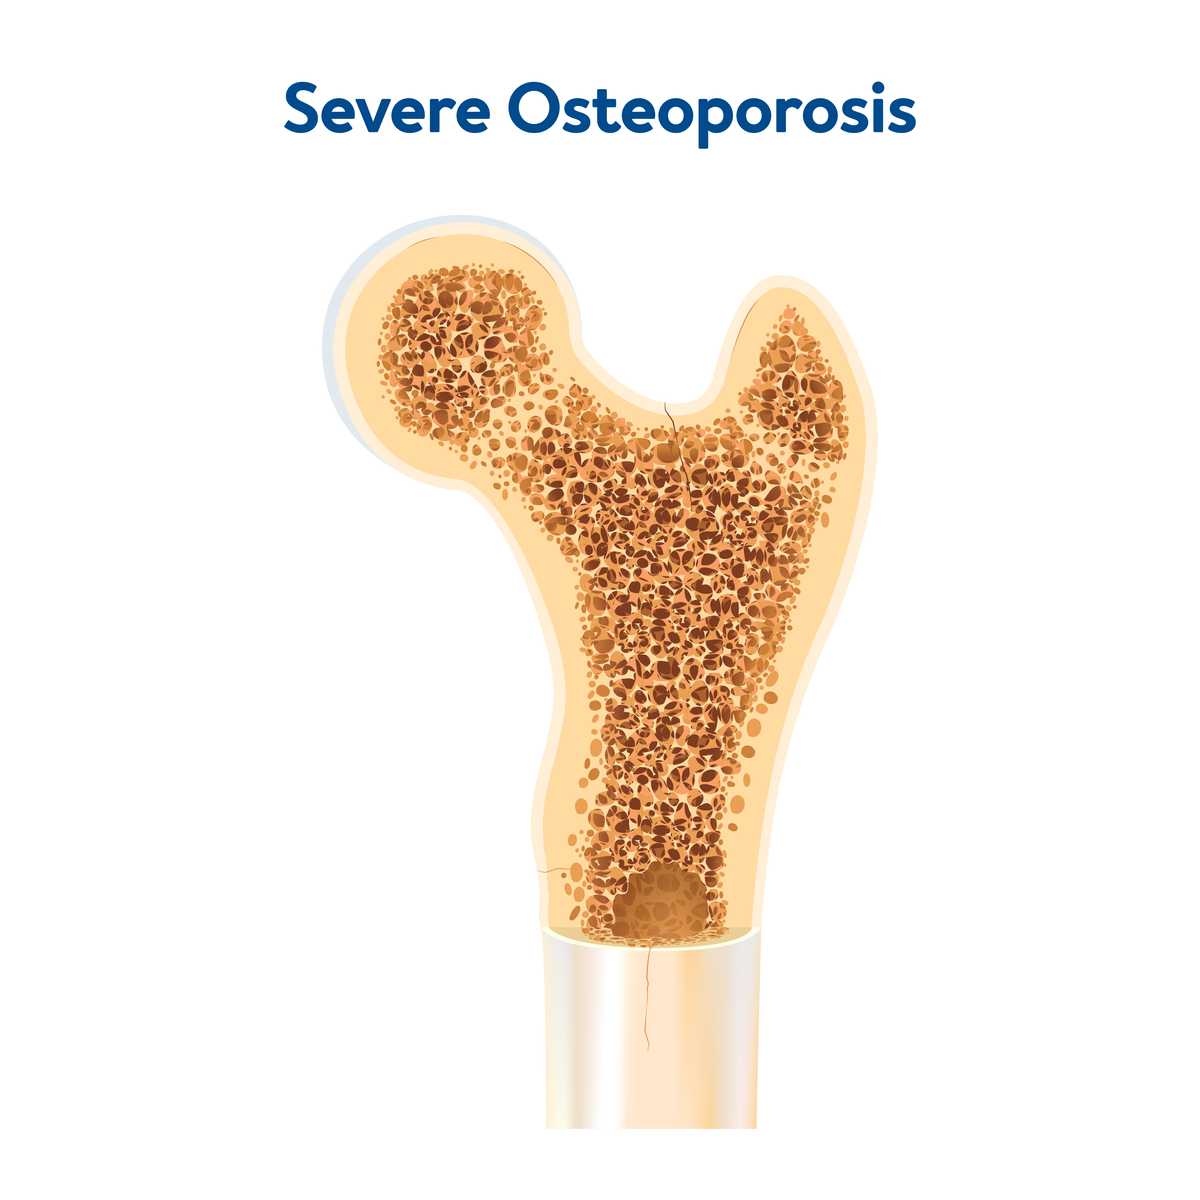 Severe osteoporosis illustration